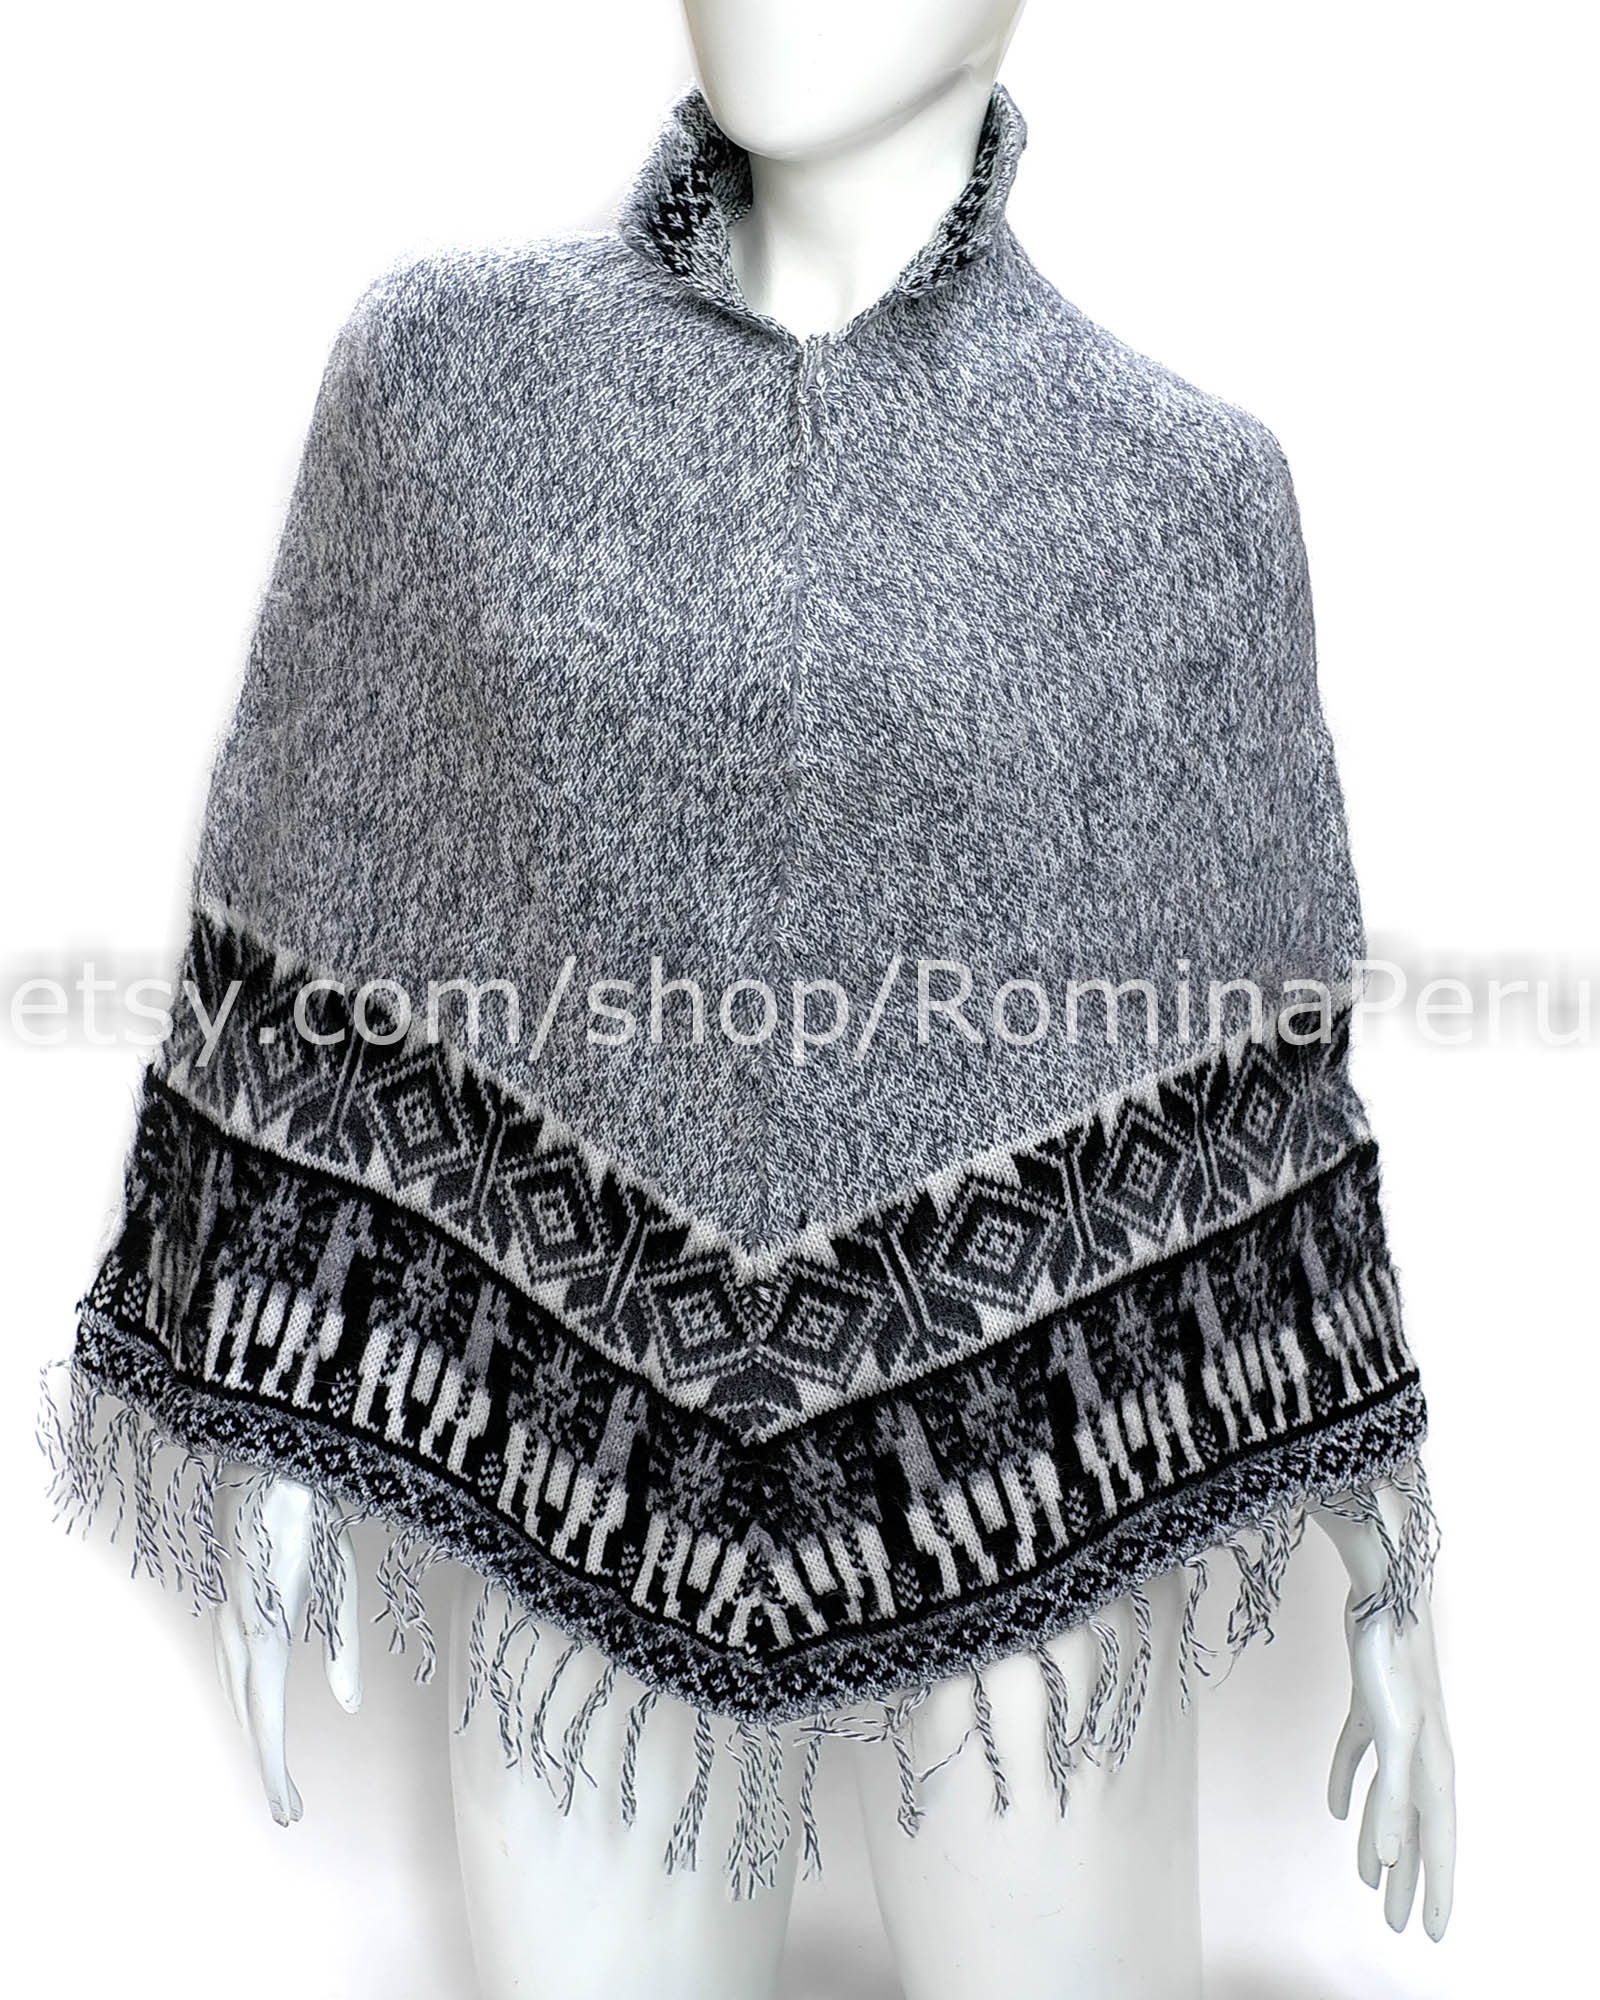 Superfine Alpaca Wool Hooded Alpaca Poncho for Women Cloak Cape Coat Ruana Ultra Soft